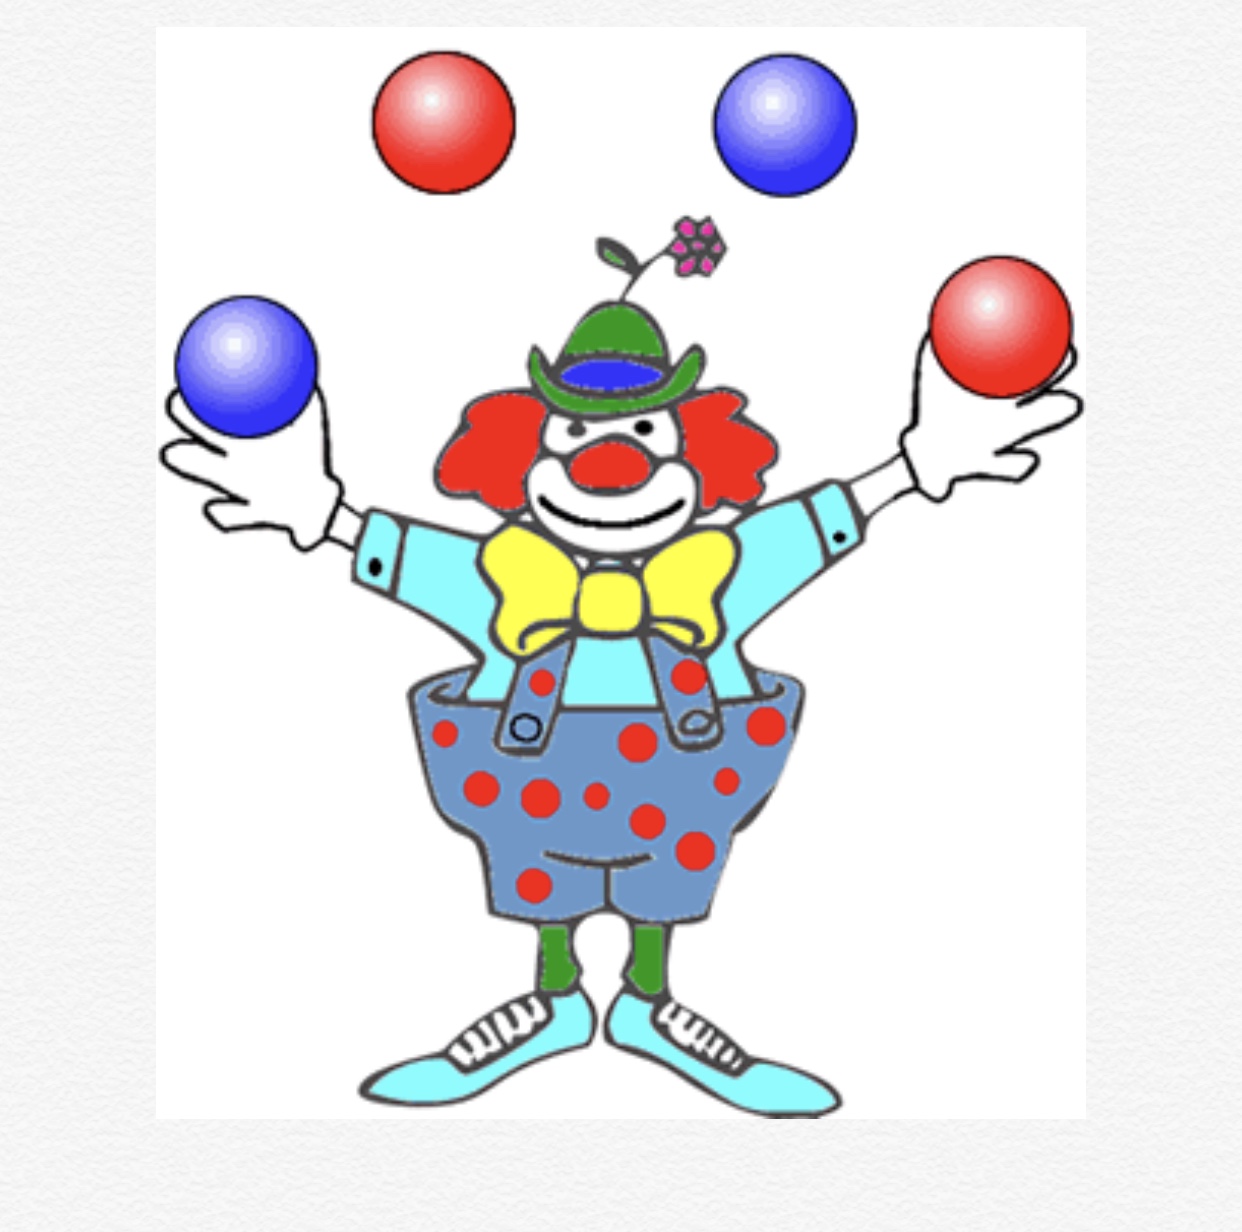 Анимация клоуна. Анимированные клоуны. Весёлые клоуны. Клоун жонглер. Клоун на прозрачном фоне.